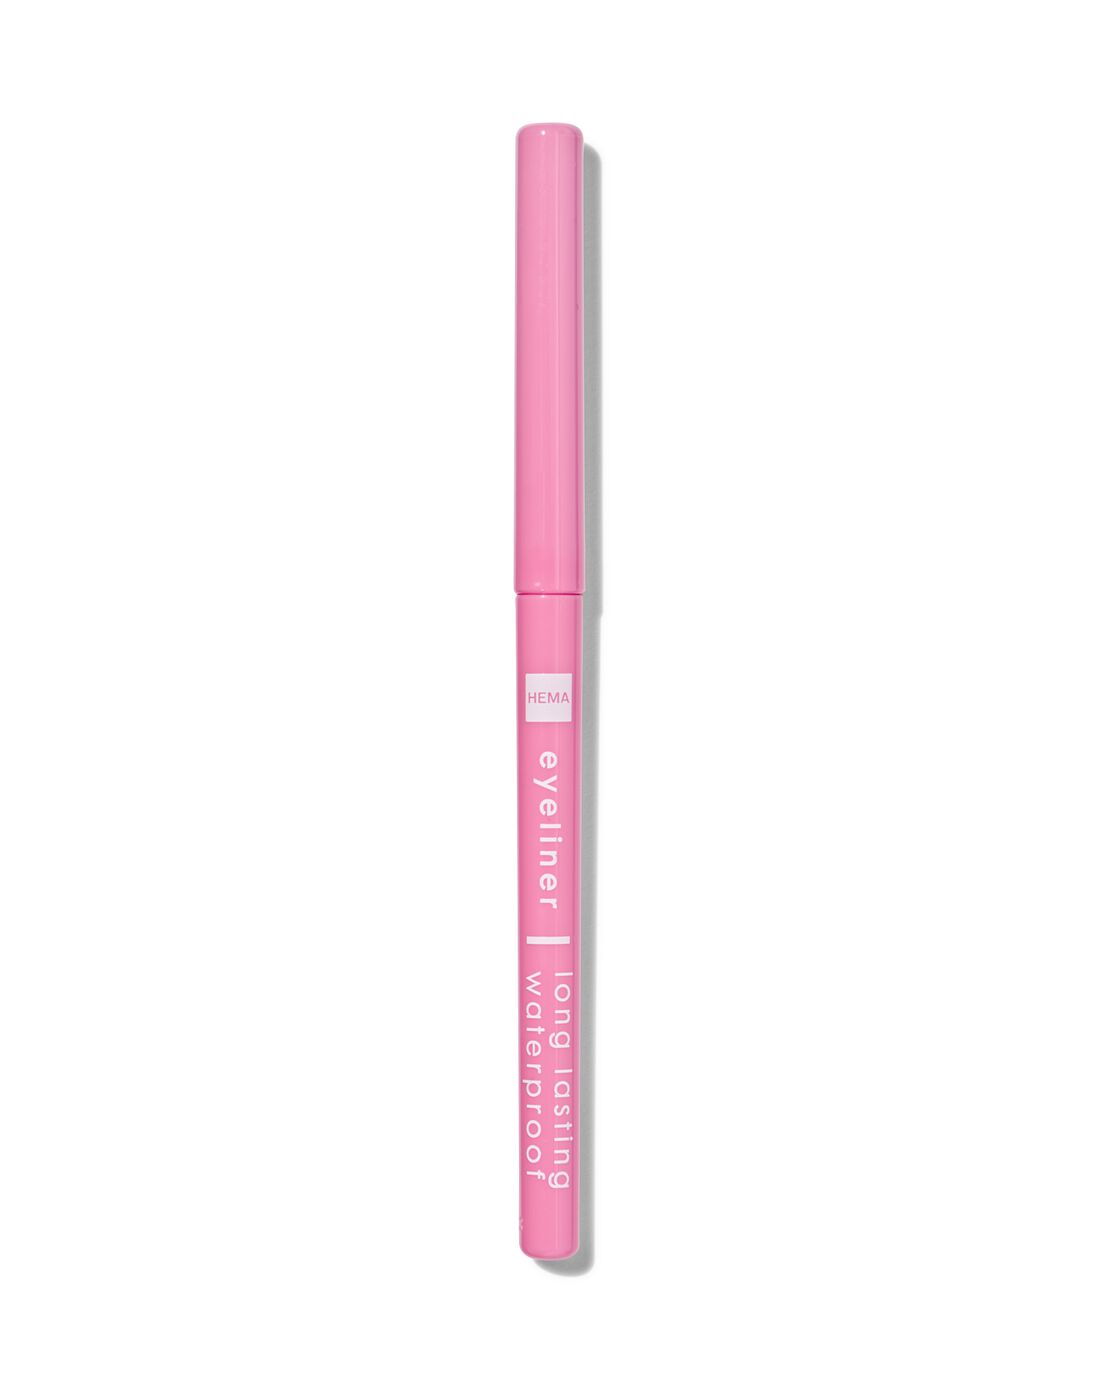 HEMA Perfect Eyeliner Waterproof 204 Soft Pink